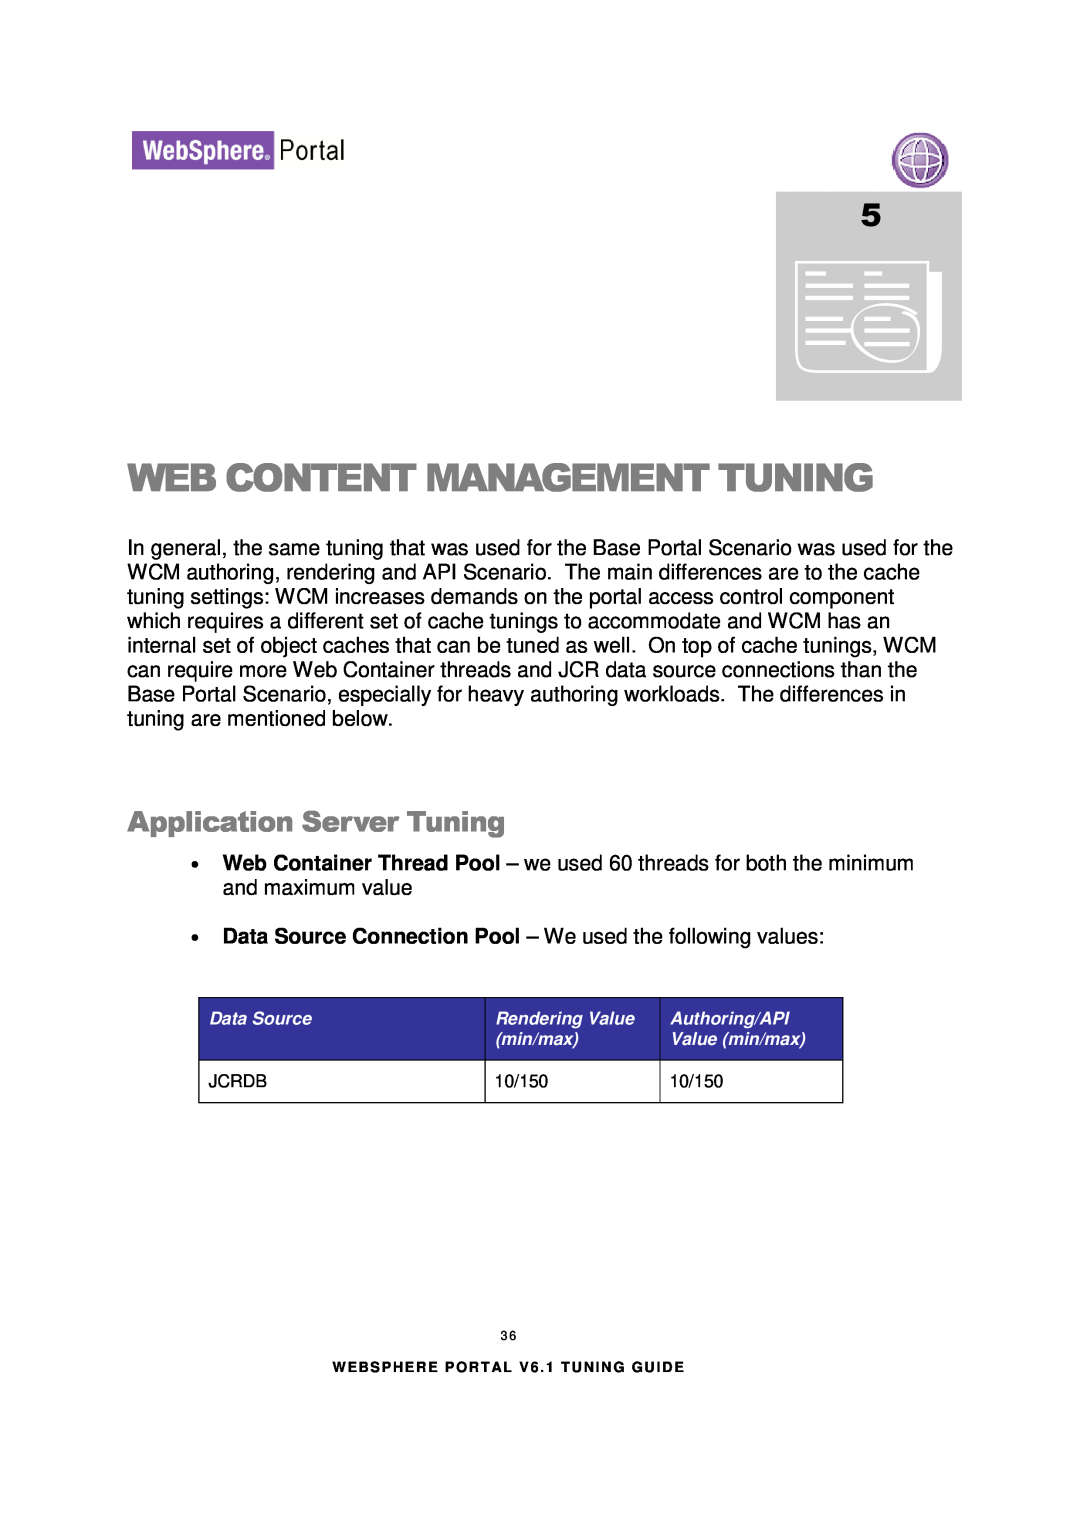 IBM 6.1.X manual Web Content Management Tuning, Application Server Tuning 